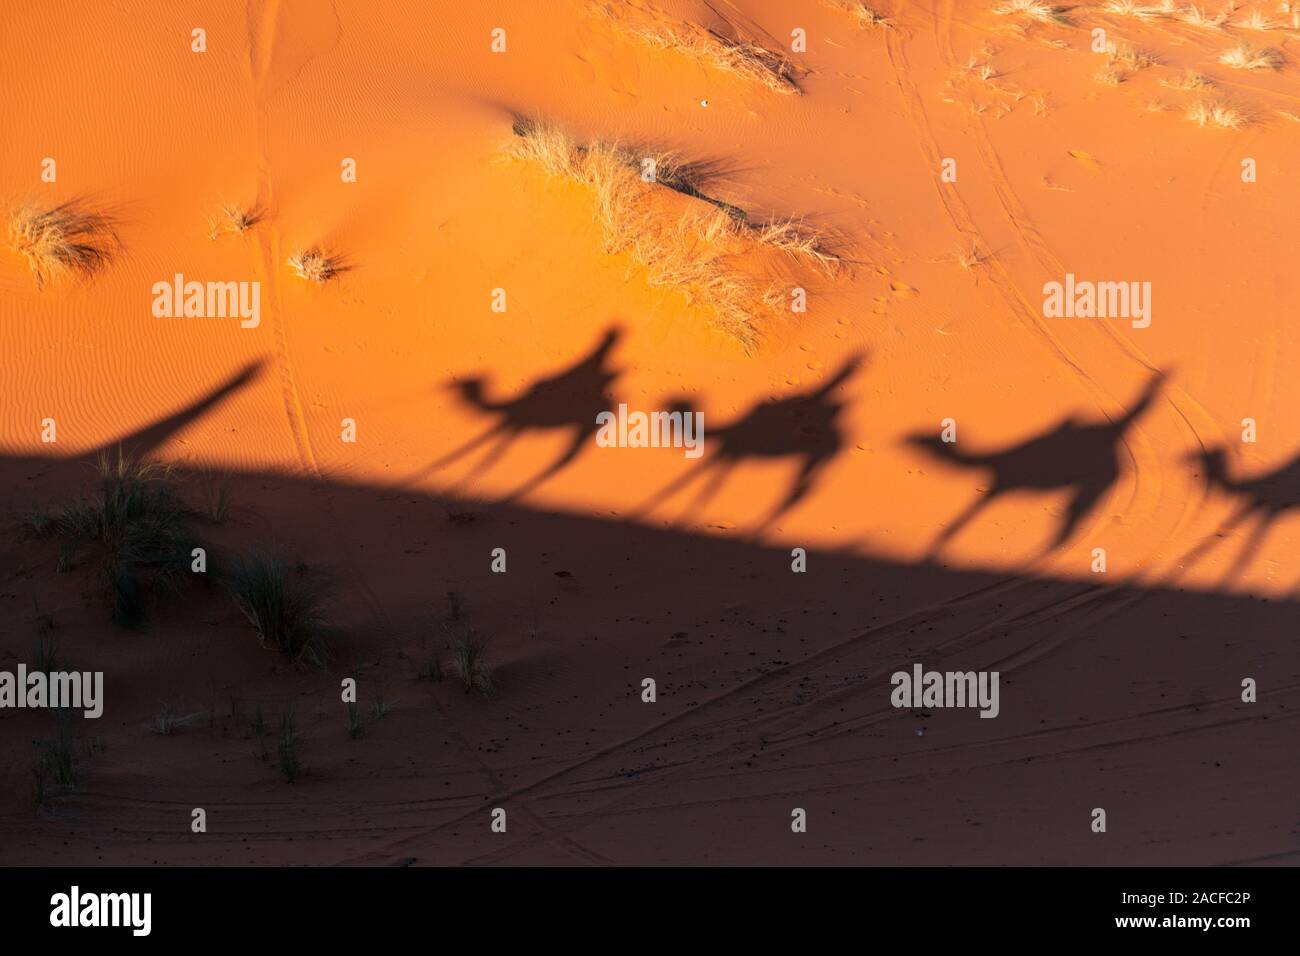 Shades of Camel caravan on sand dunes in Sahara desert, Morocco Stock Photo